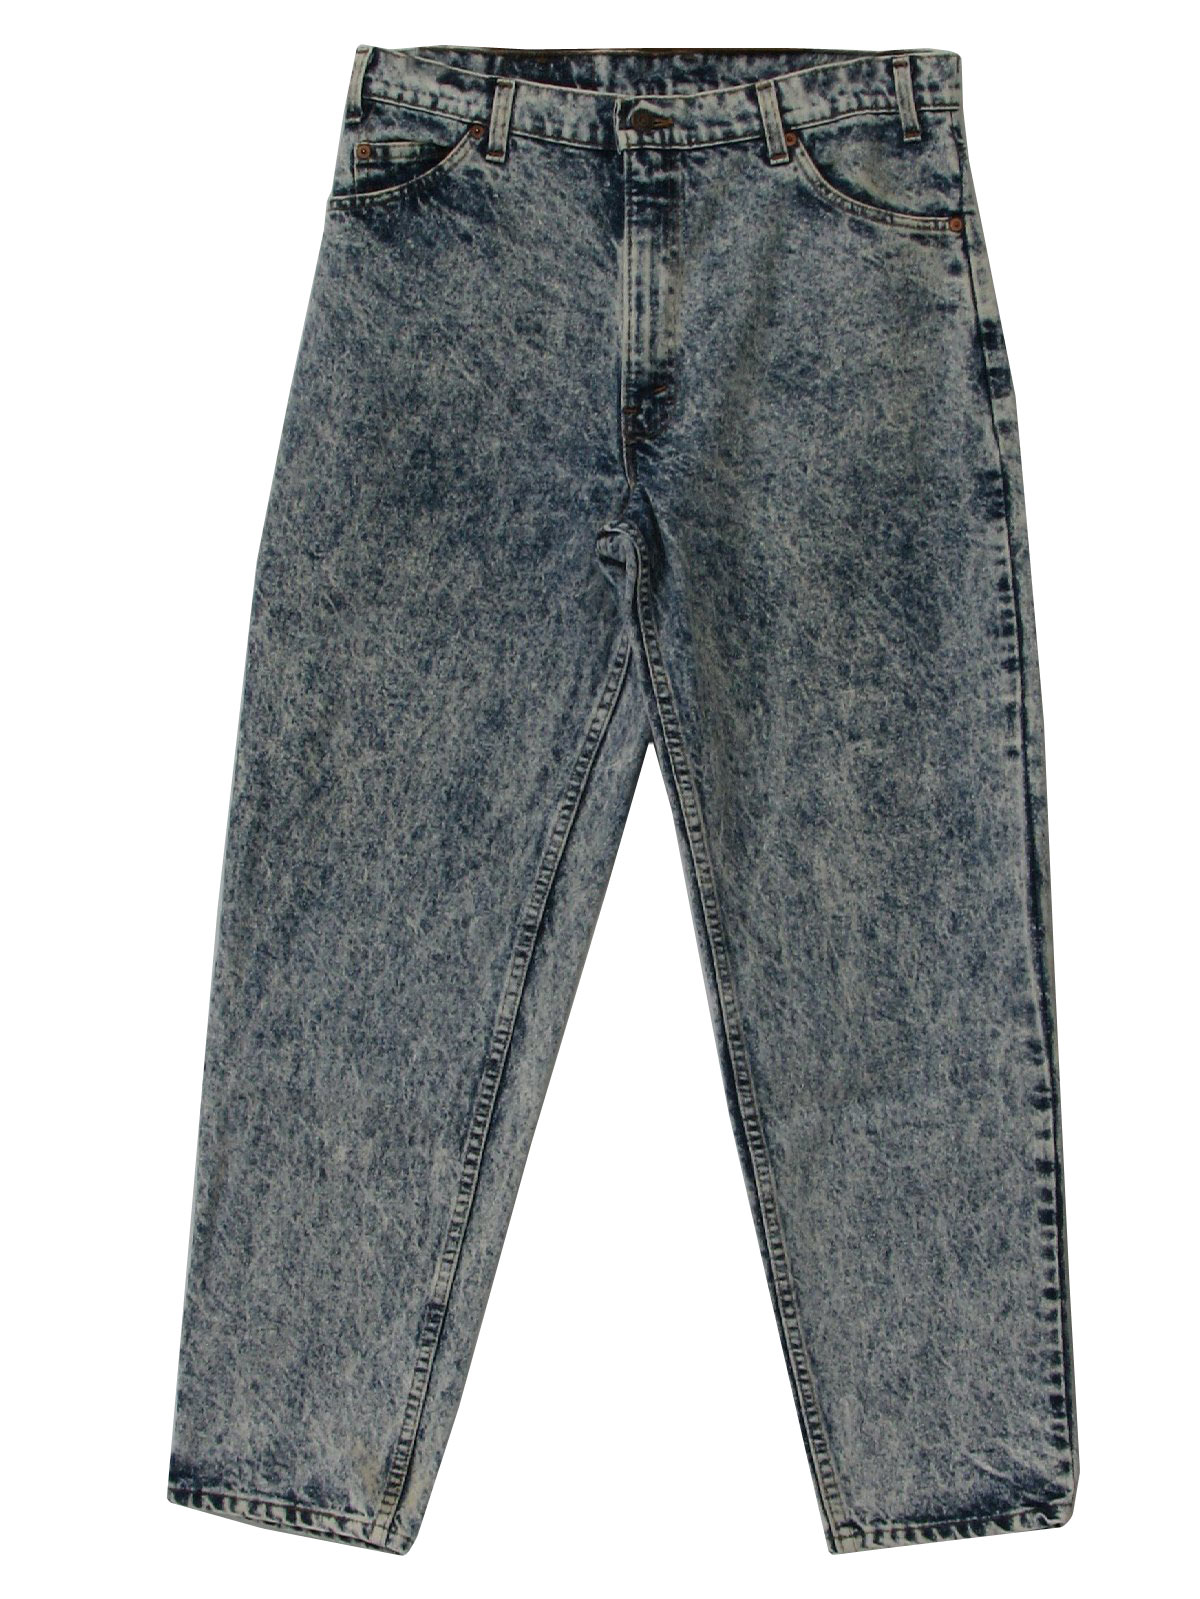 Levis 532 Eighties Vintage Pants: 80s -Levis 532- Mens dark blue and ...